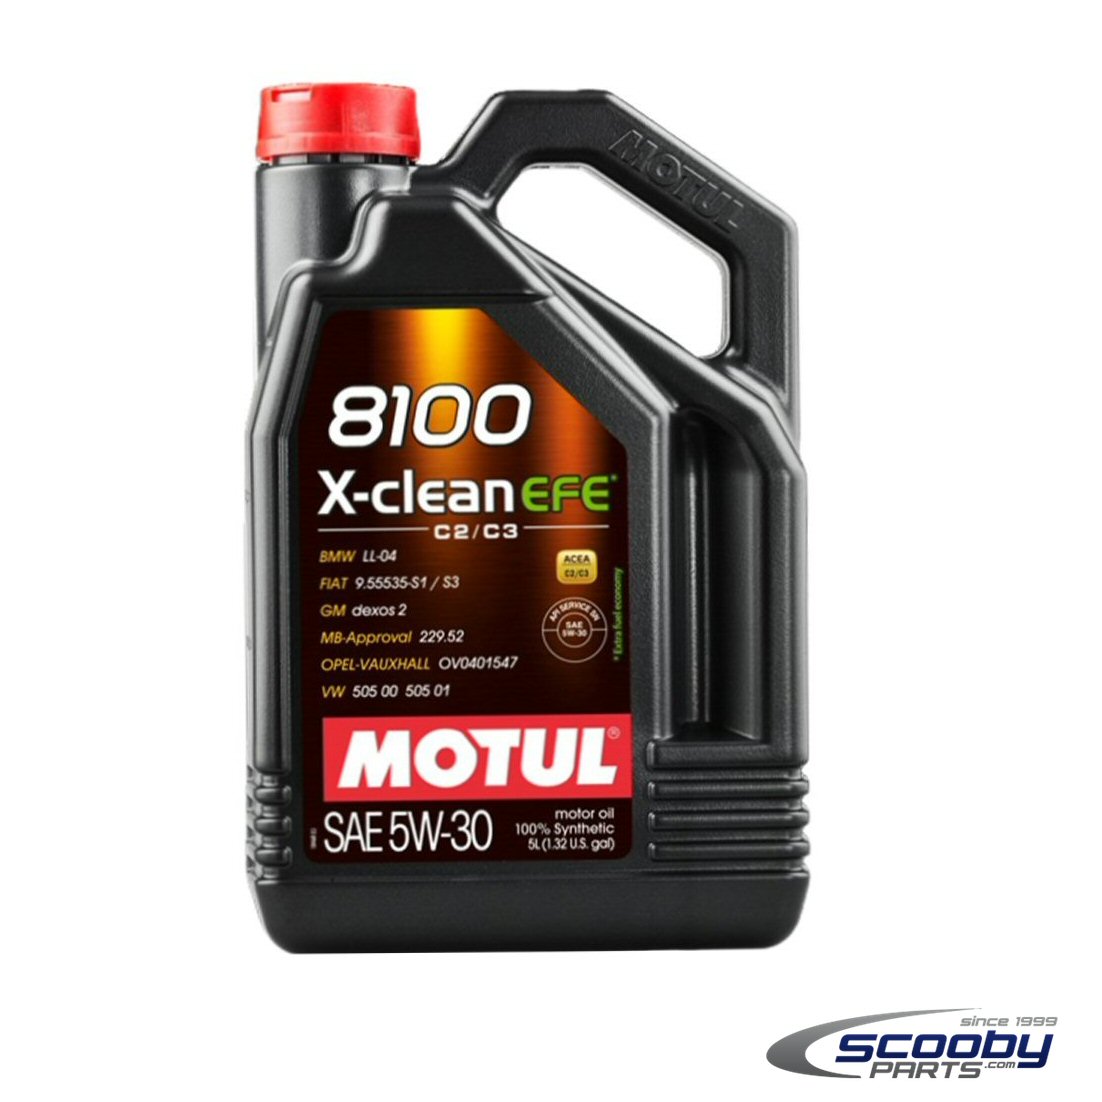 Motul 8100 X-clean efe Fully Synthetic 5w30 Engine Oil - 5 Litre Bottle_1